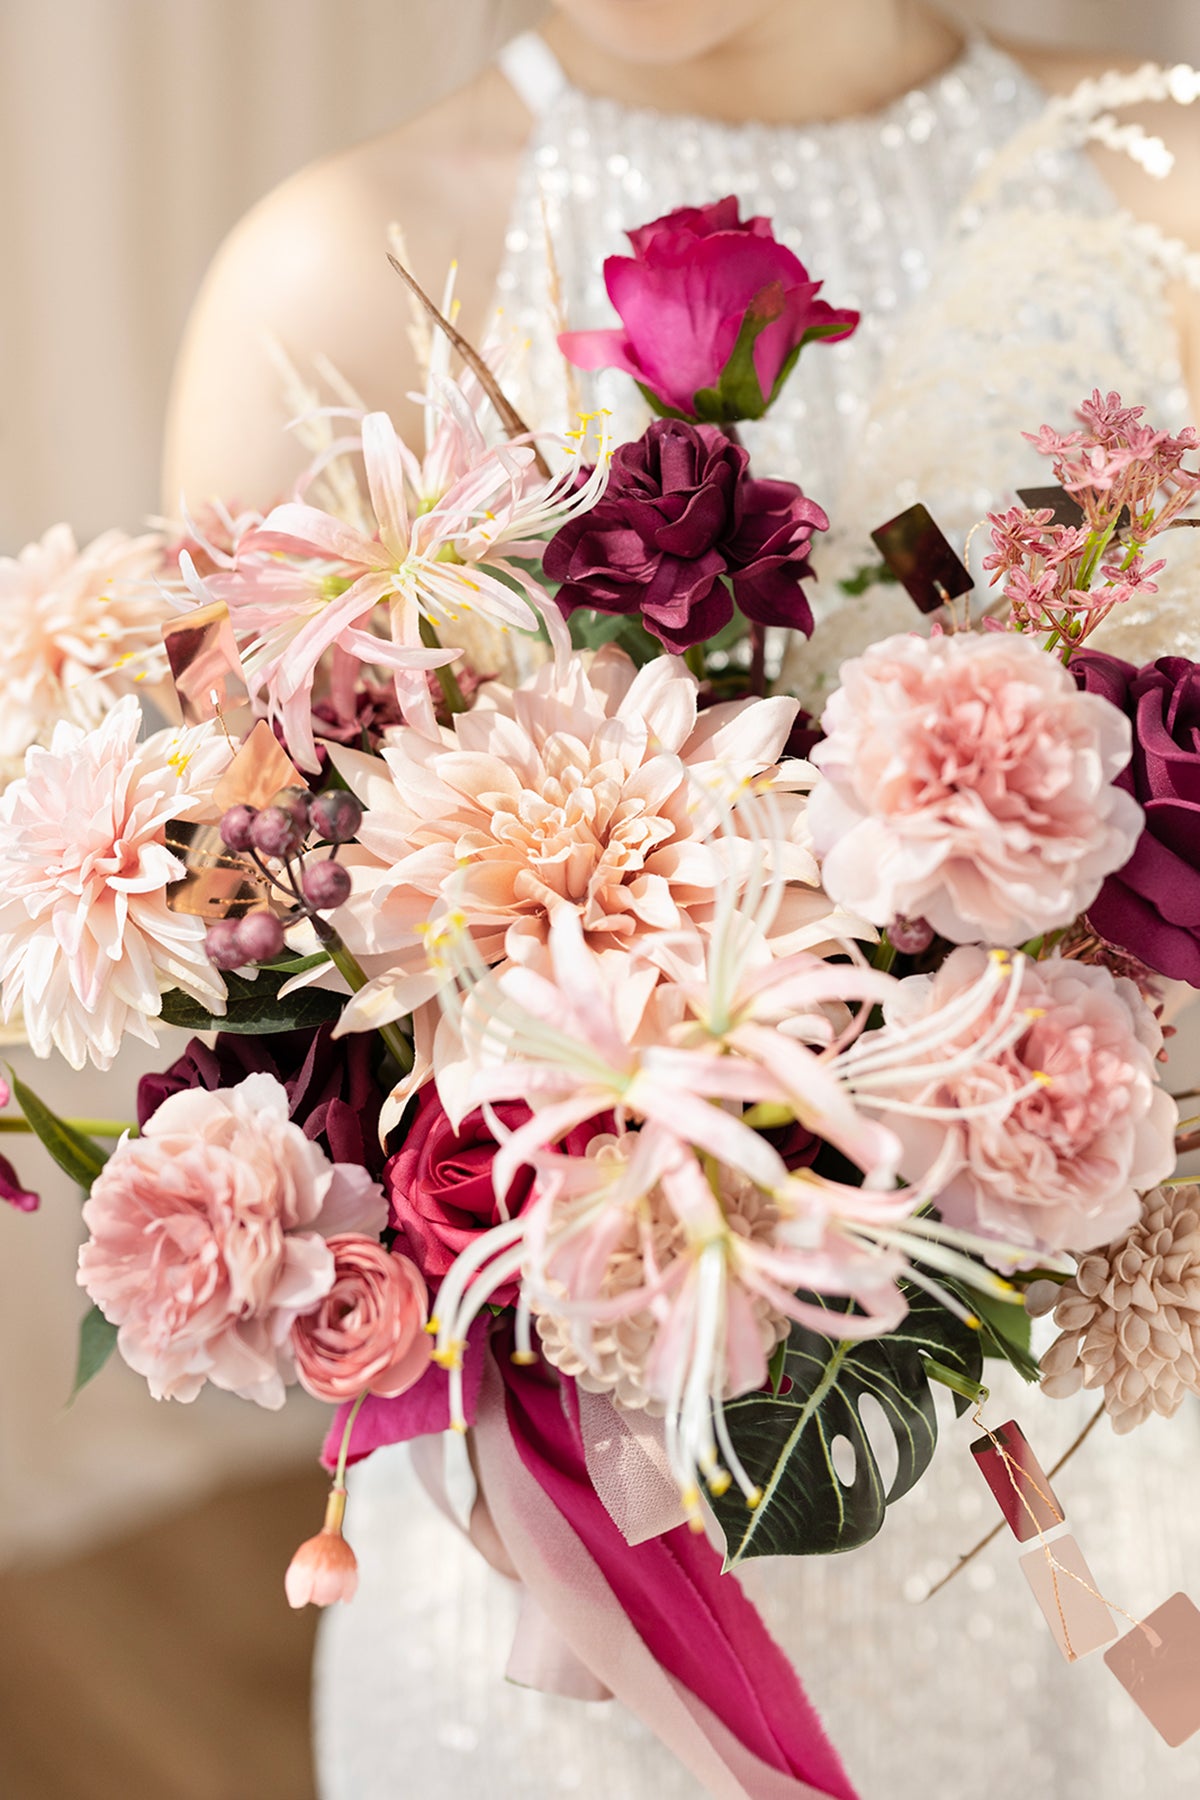 Medium Free-Form Bridal Bouquet in Valentine Magenta